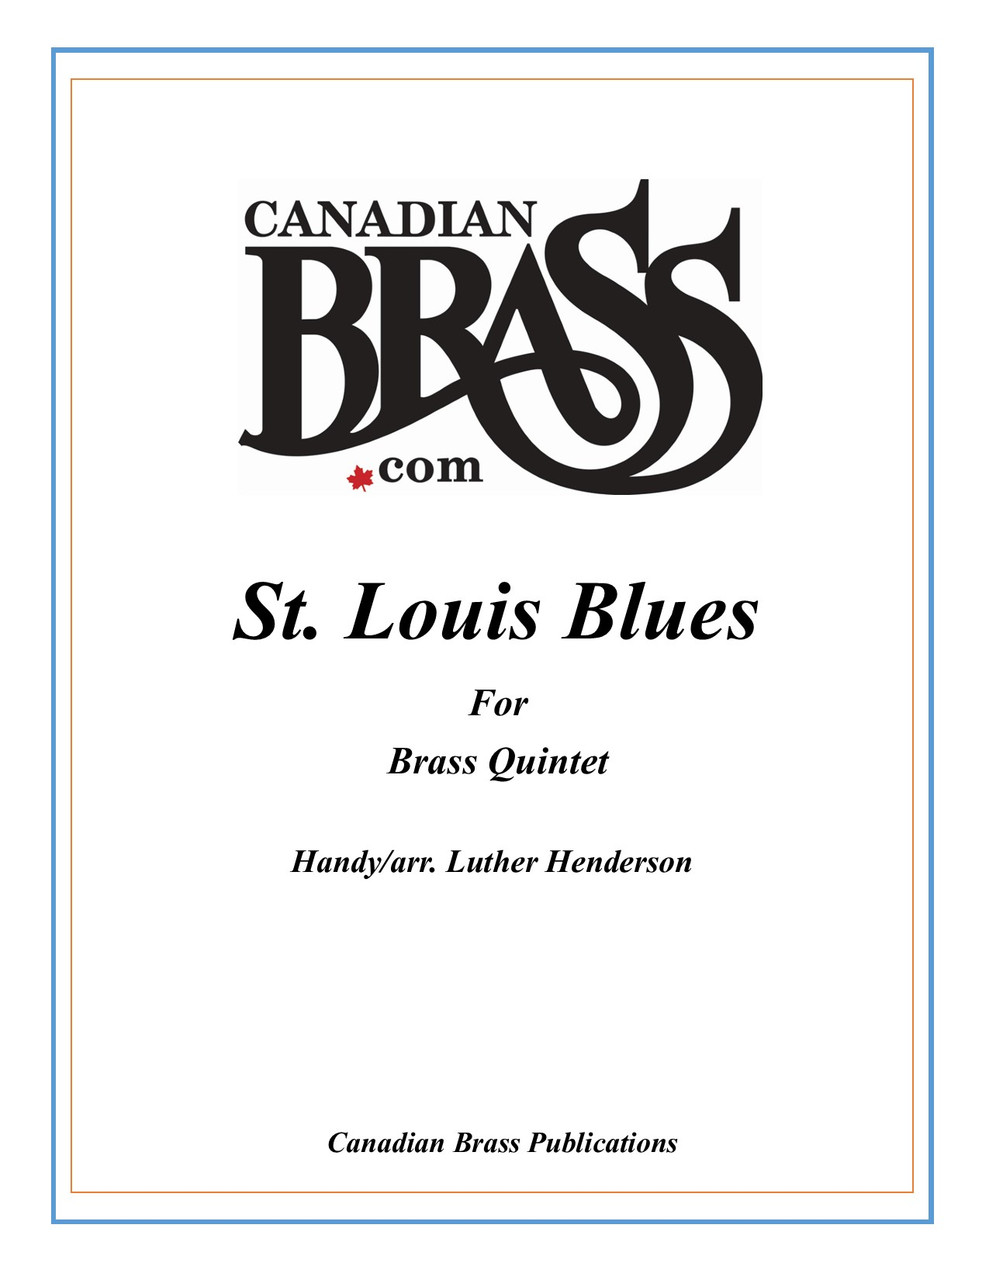 St. Louis Blues Brass Quintet (Handy/ arr. Henderson) - Canadian